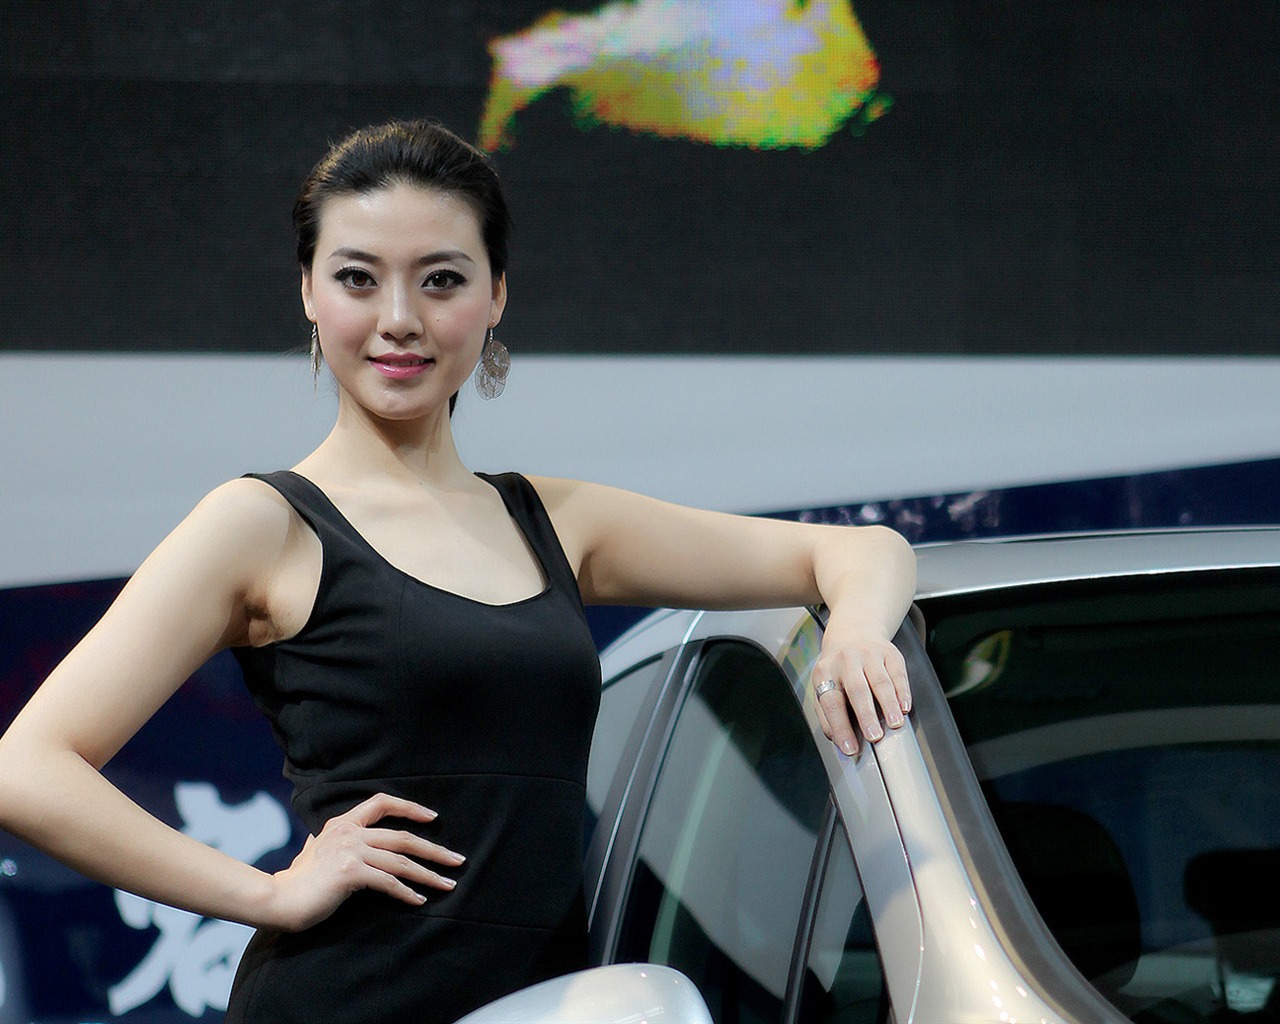 2010 Peking autosalonu modely aut odběrem (2) #10 - 1280x1024